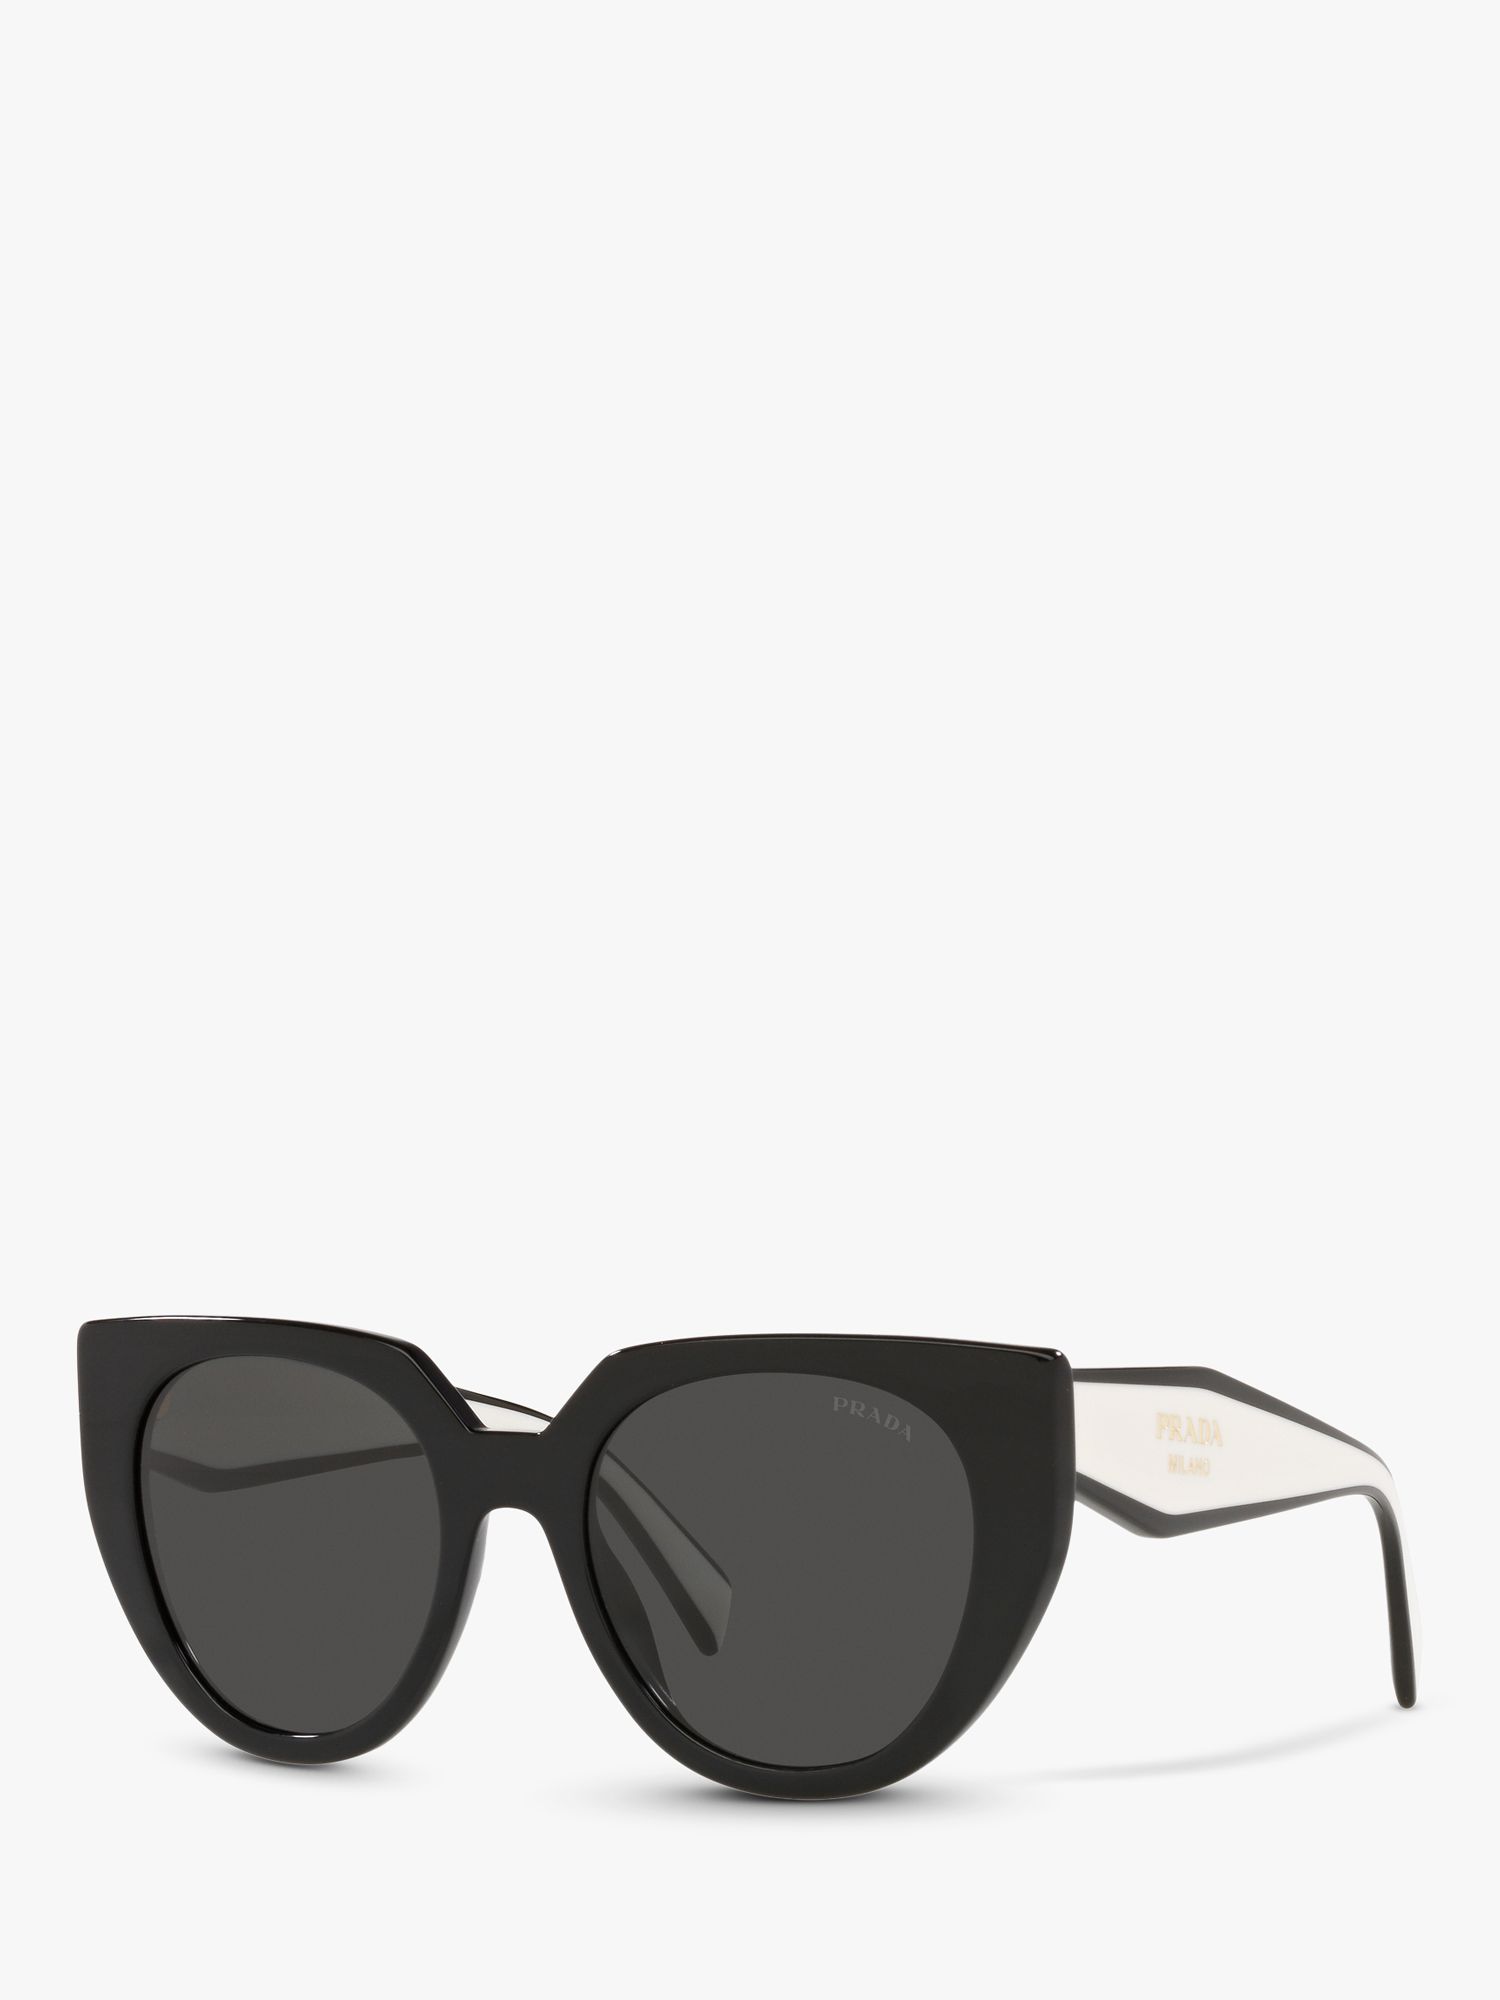 Women's Prada Sunglasses | John Lewis & Partners